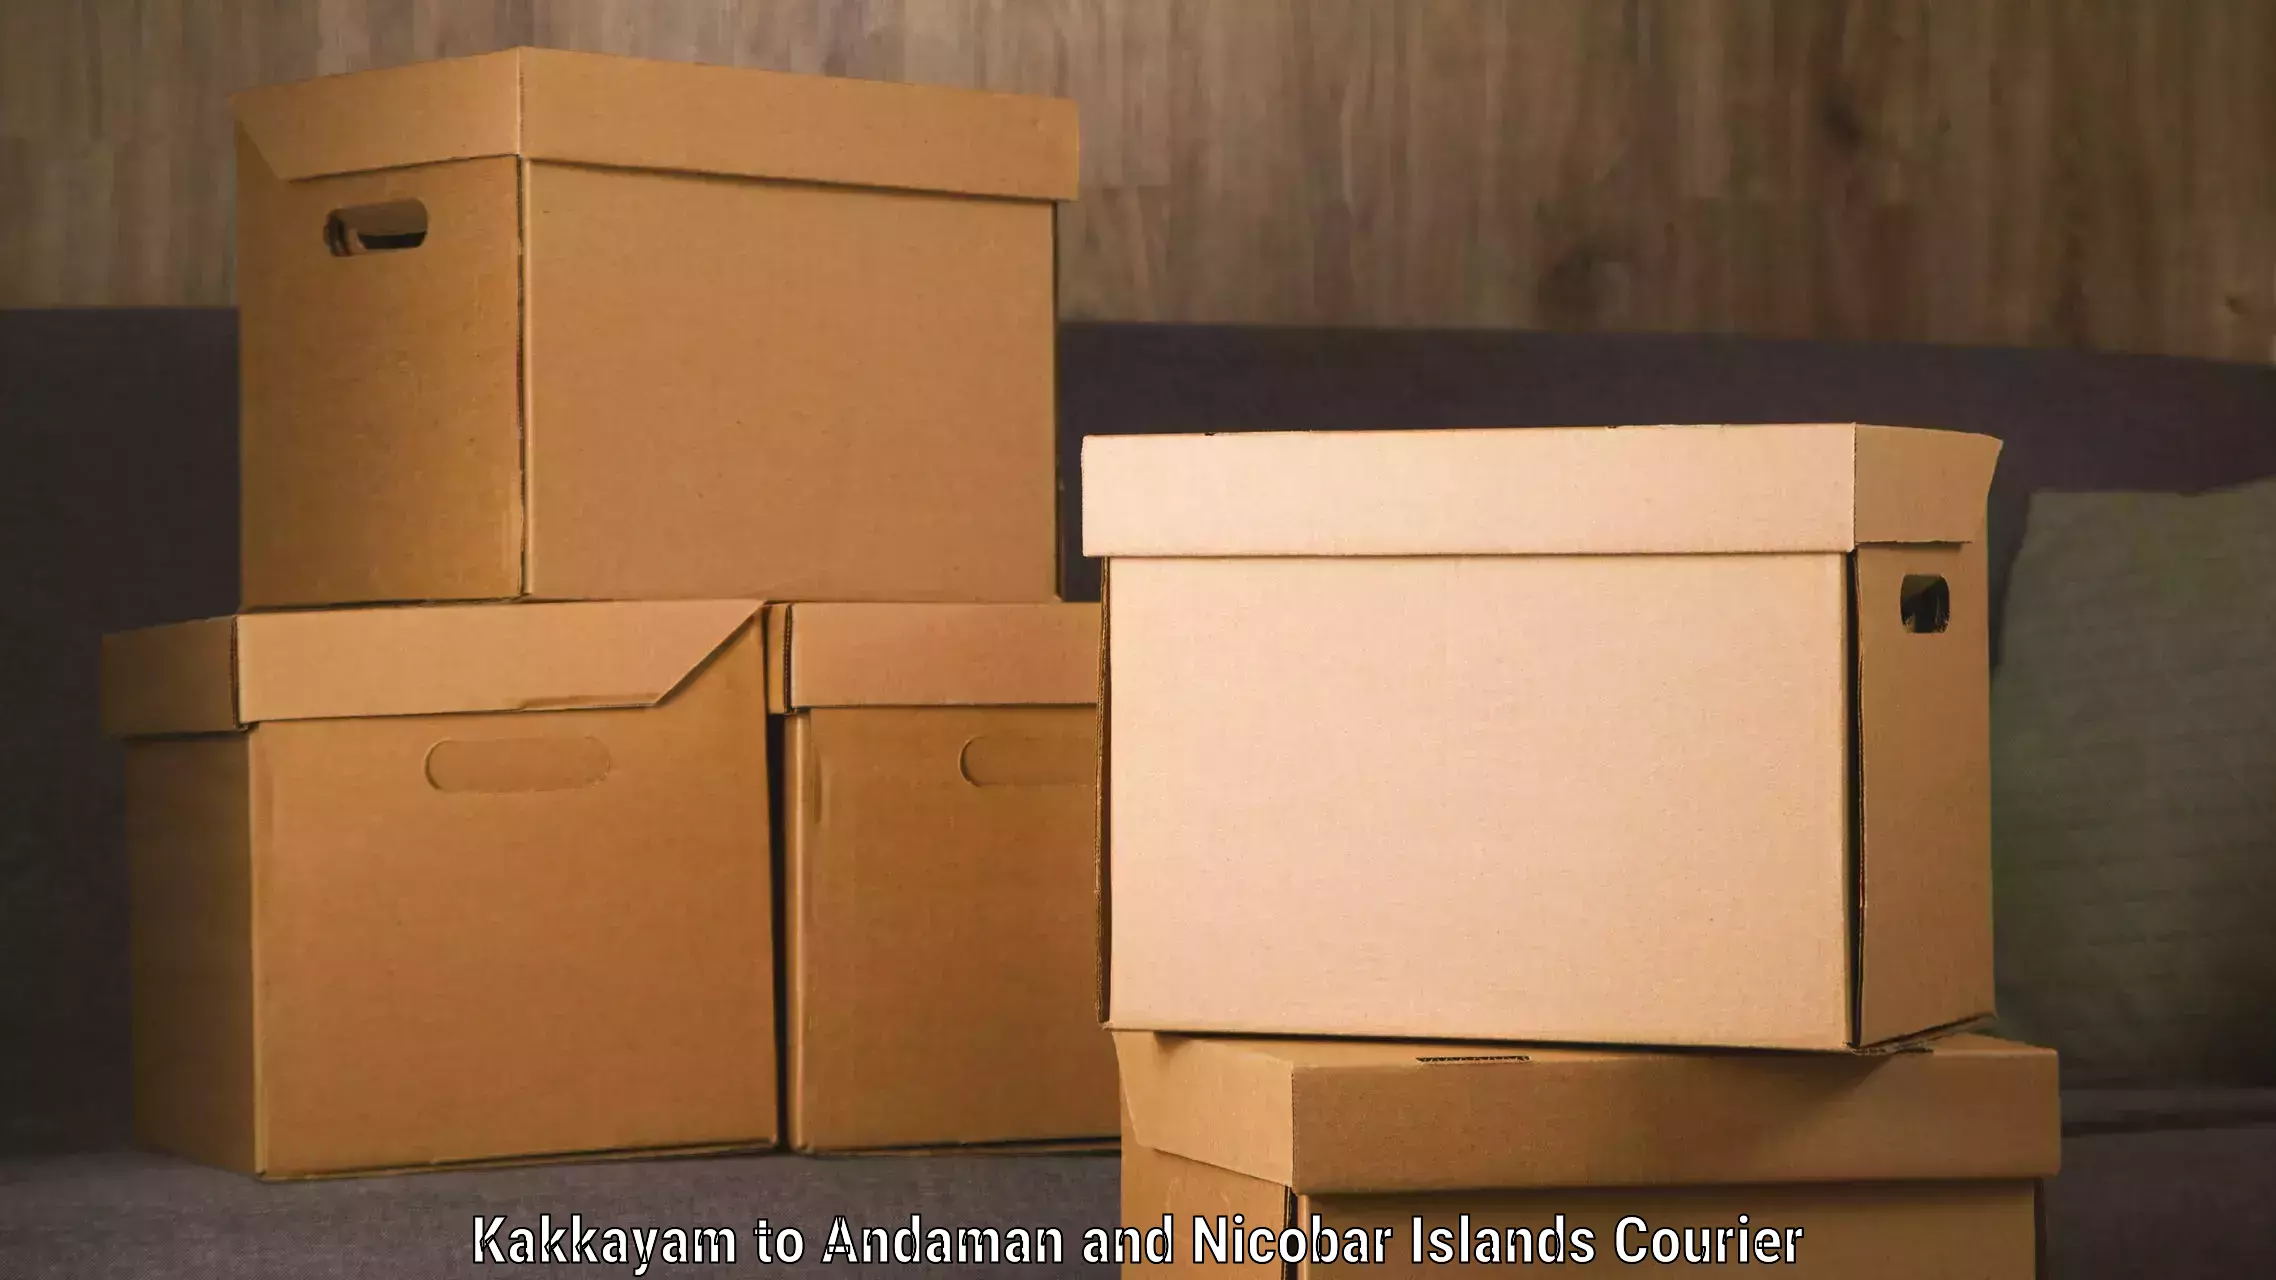 Courier service partnerships Kakkayam to Andaman and Nicobar Islands